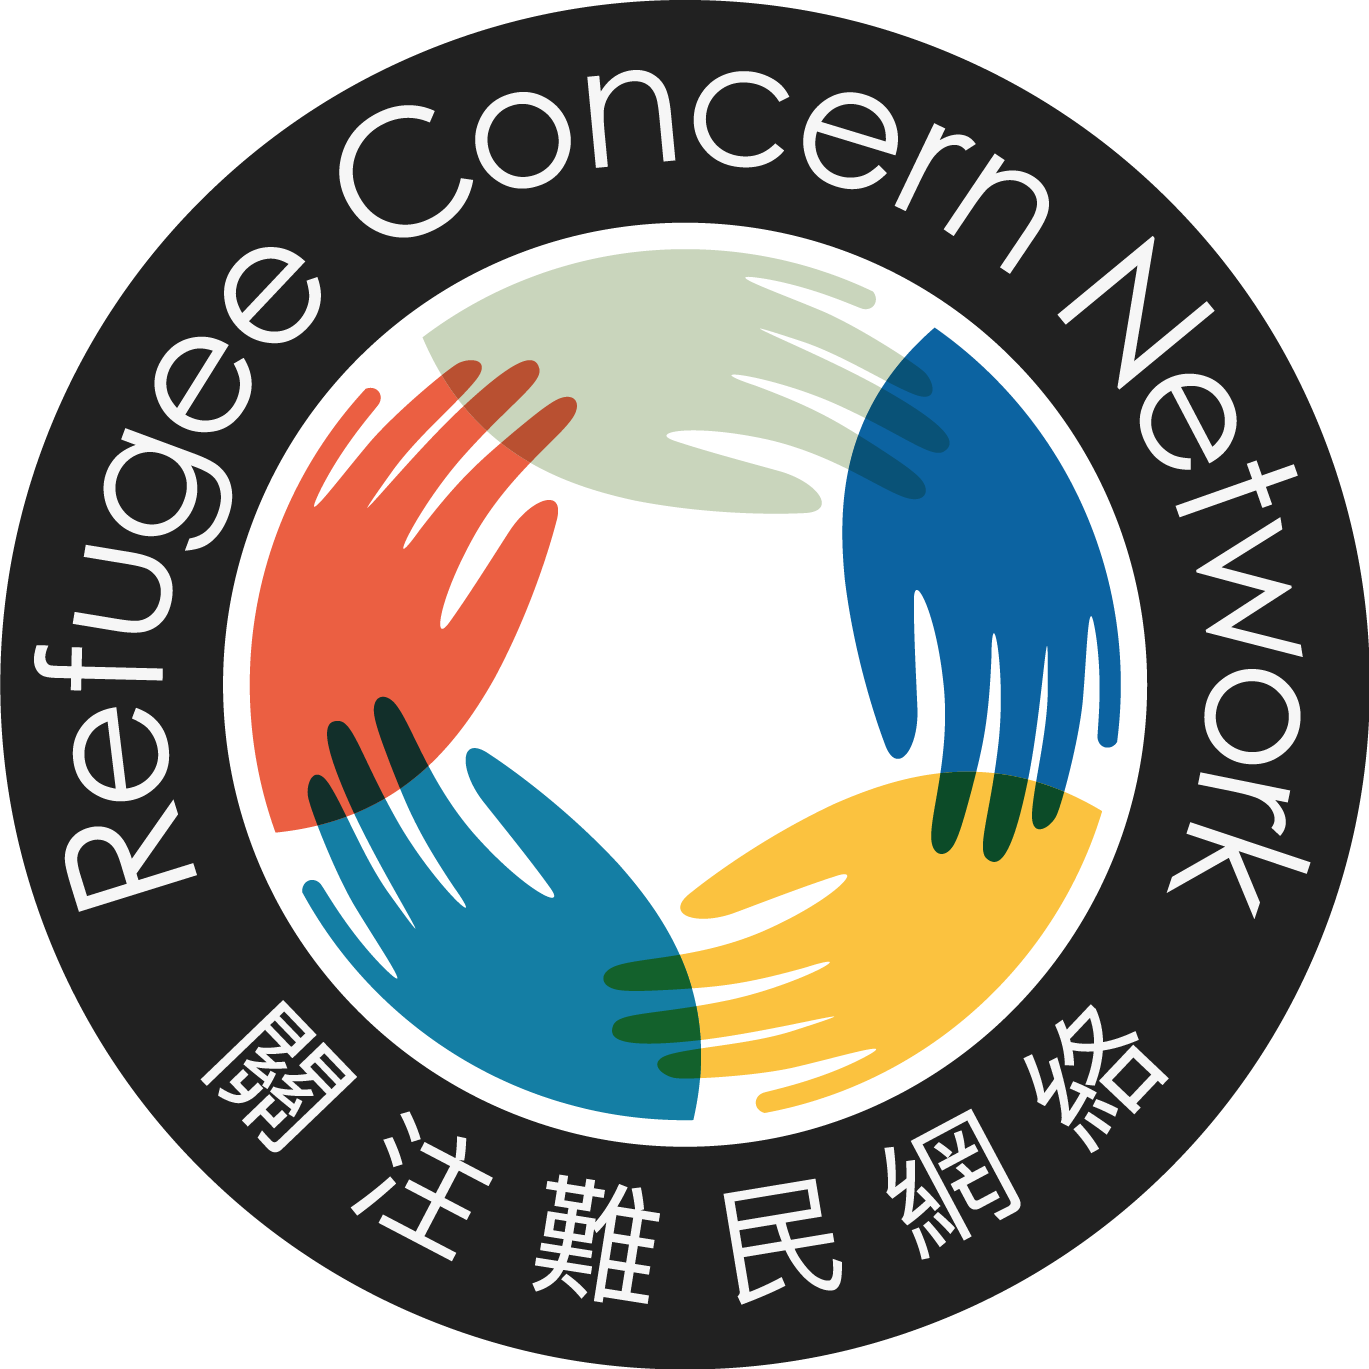 Refugee Concern Network Hong Kong